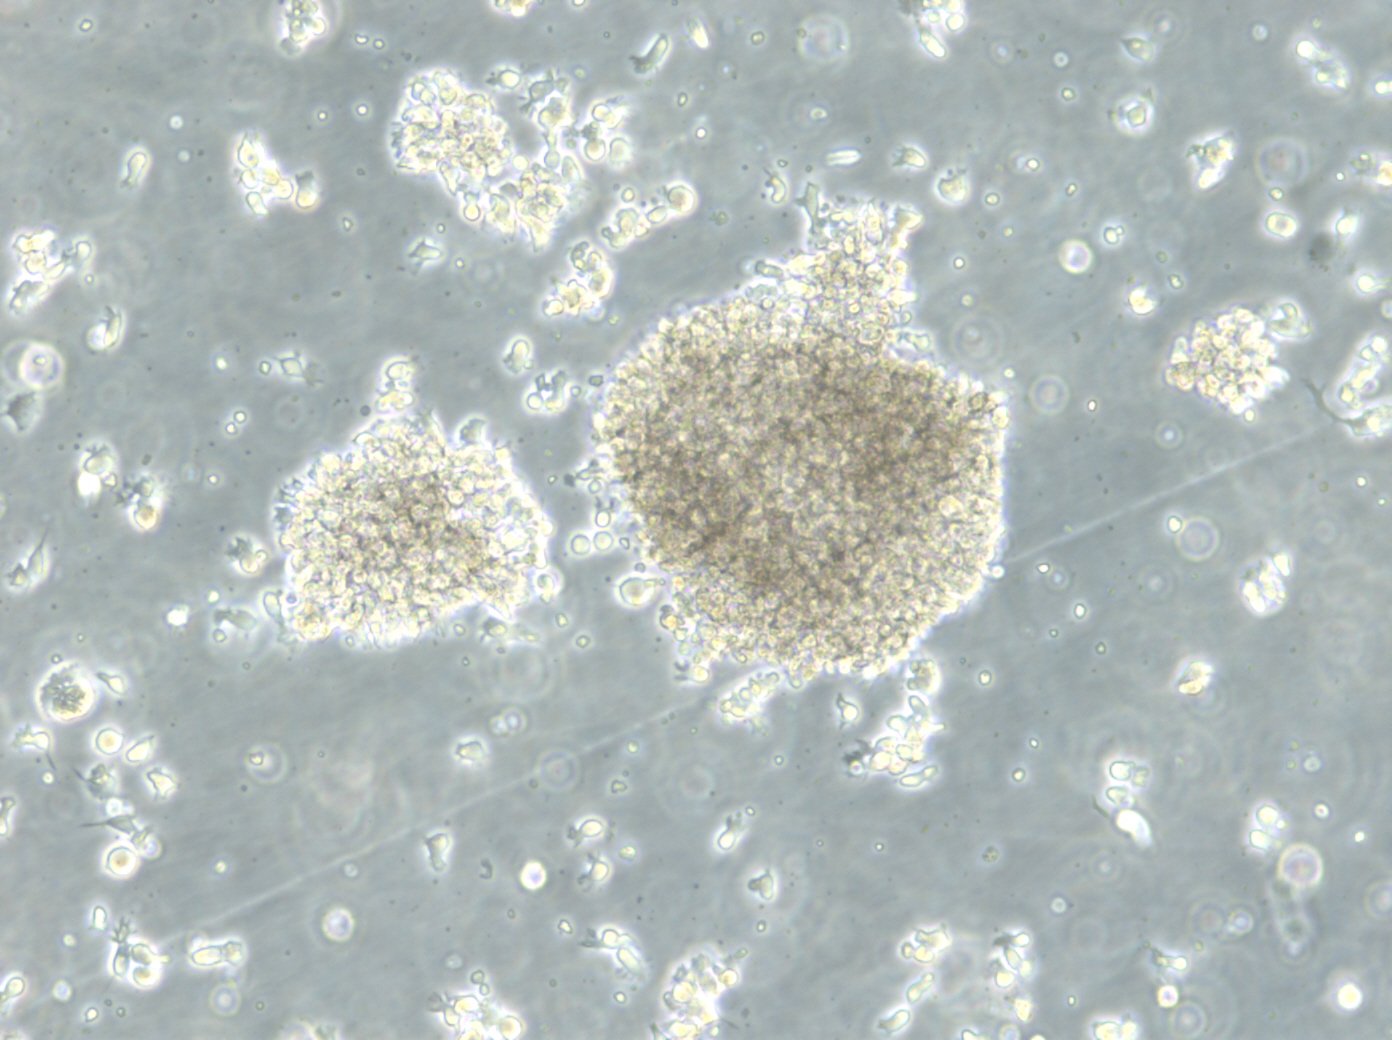 B-LCL-HROC24 Cells